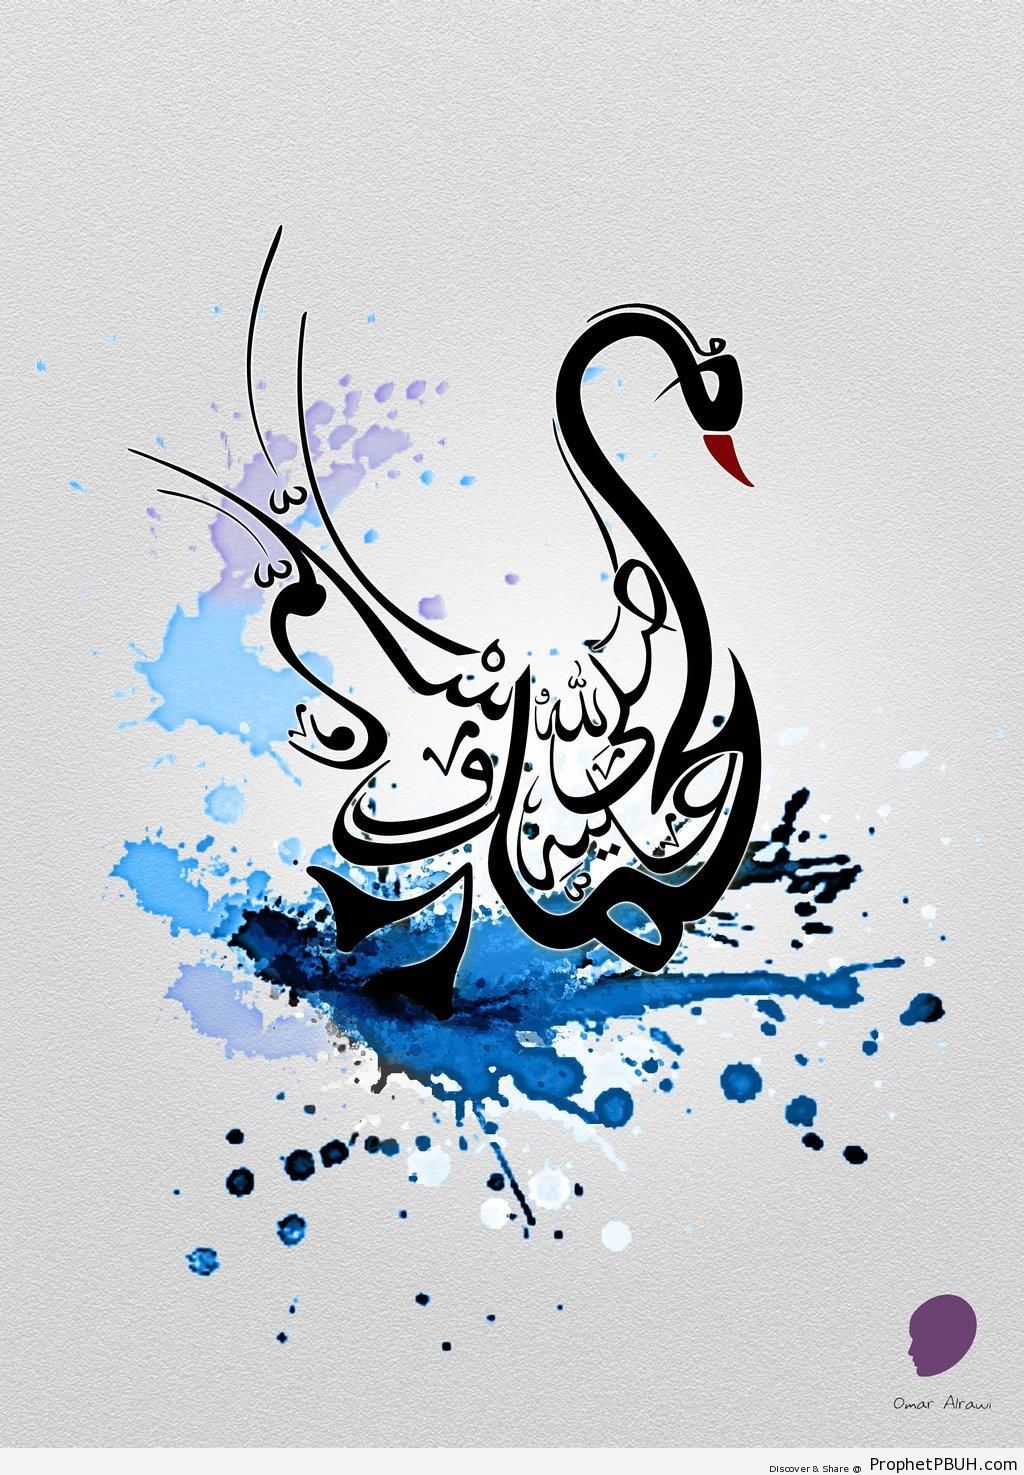 Swan-Shaped Muhammad SAW Calligraphy - Animal-Shaped Islamic Calligraphy 